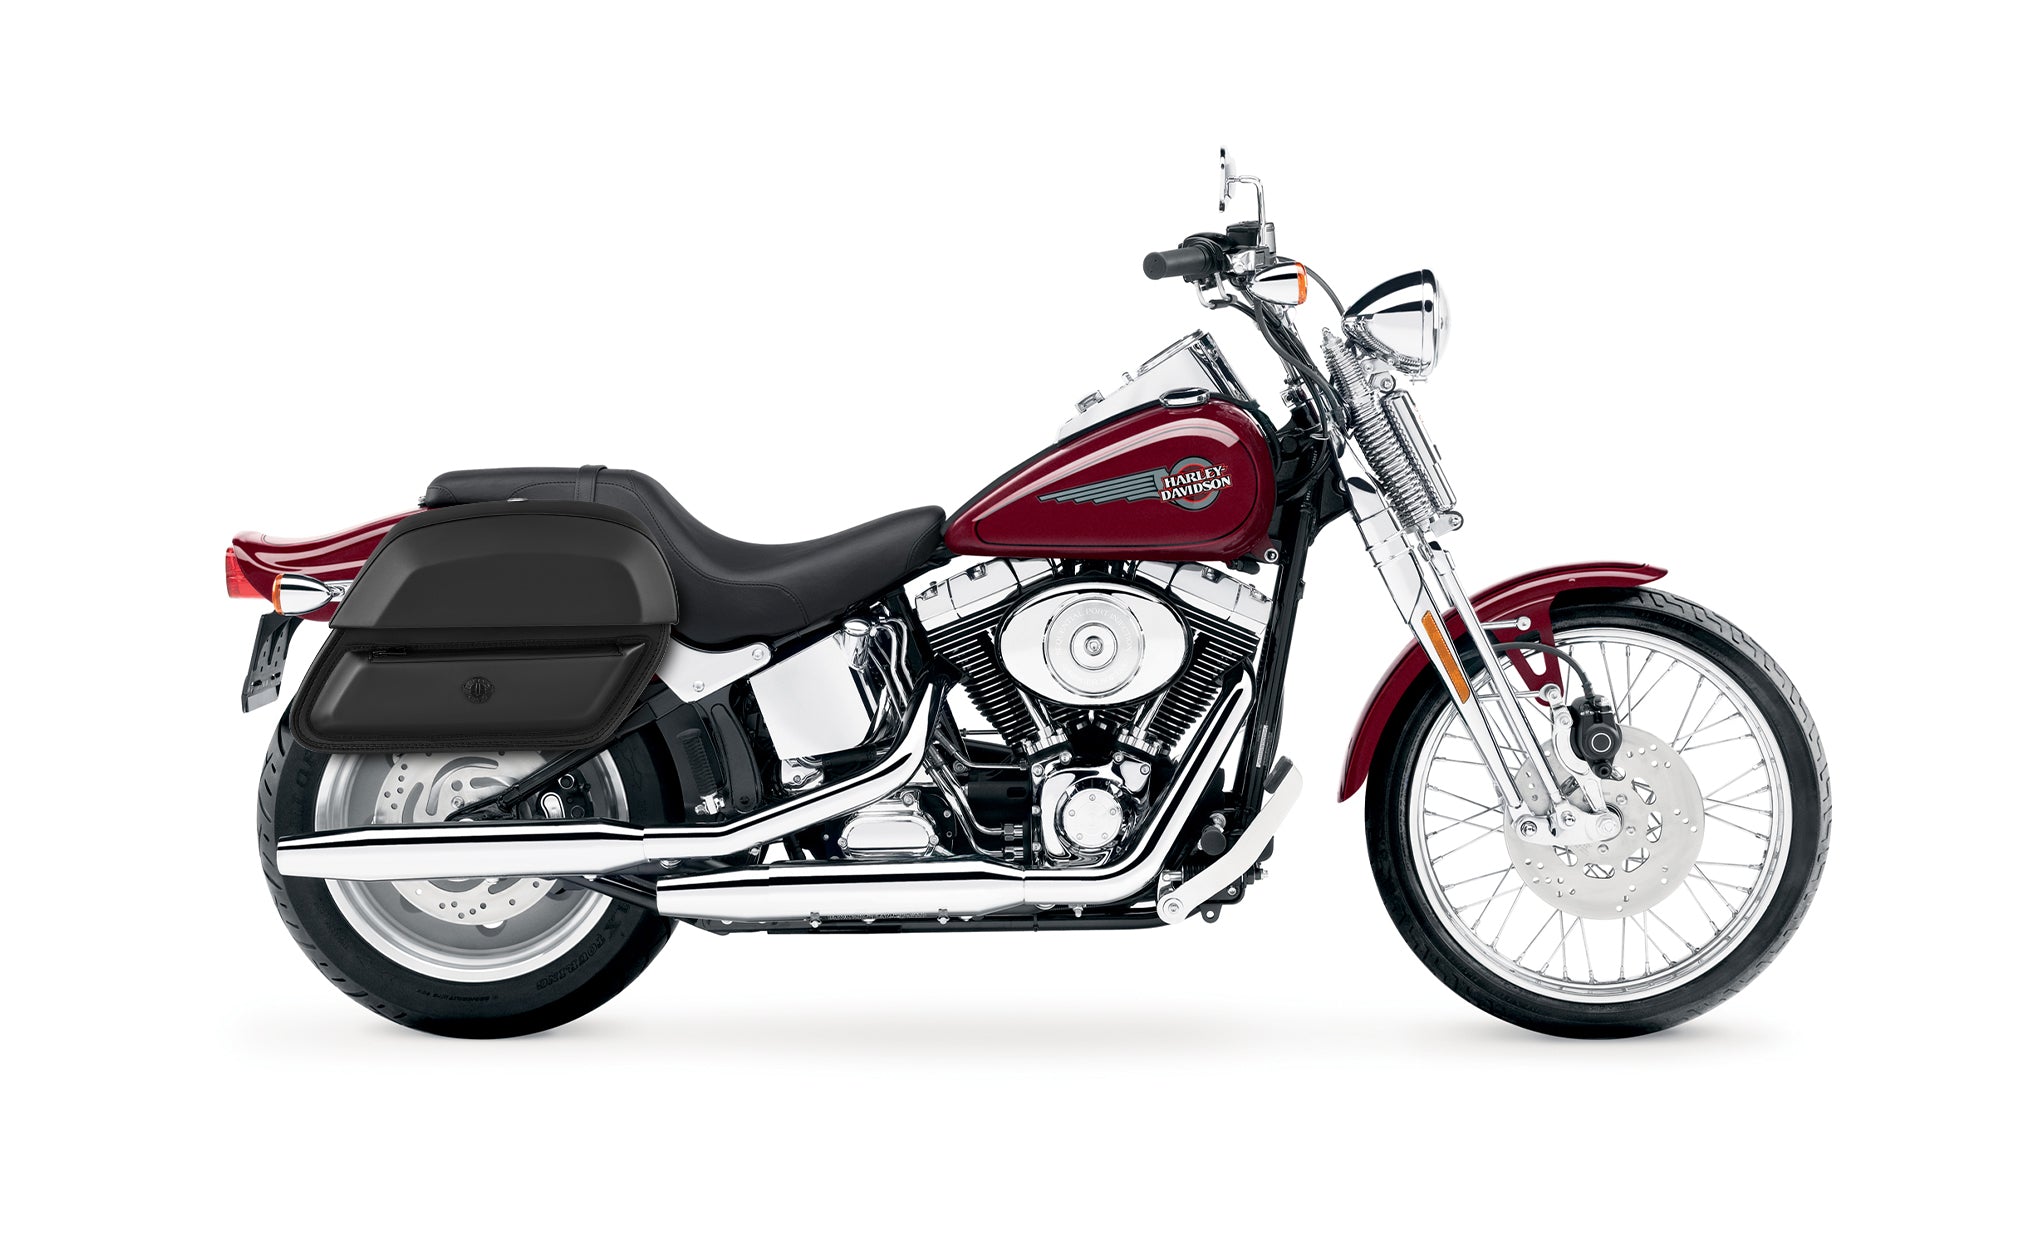 28L - Wraith Medium Leather Saddlebags for Harley Softail Springer FXSTS/I BAG on Bike View @expand